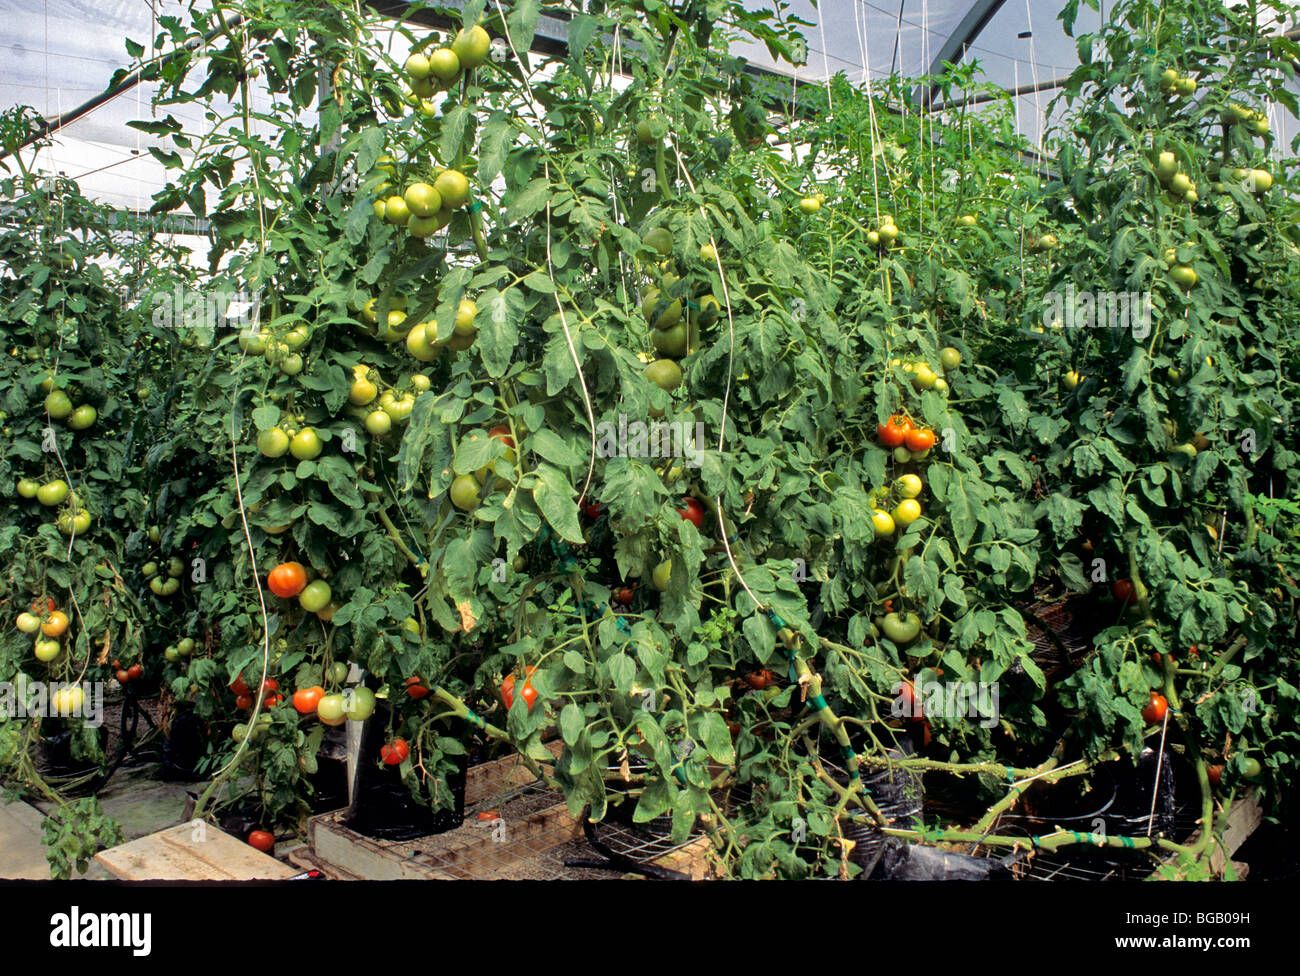 Tomates, serre, culture hydroponique. Banque D'Images